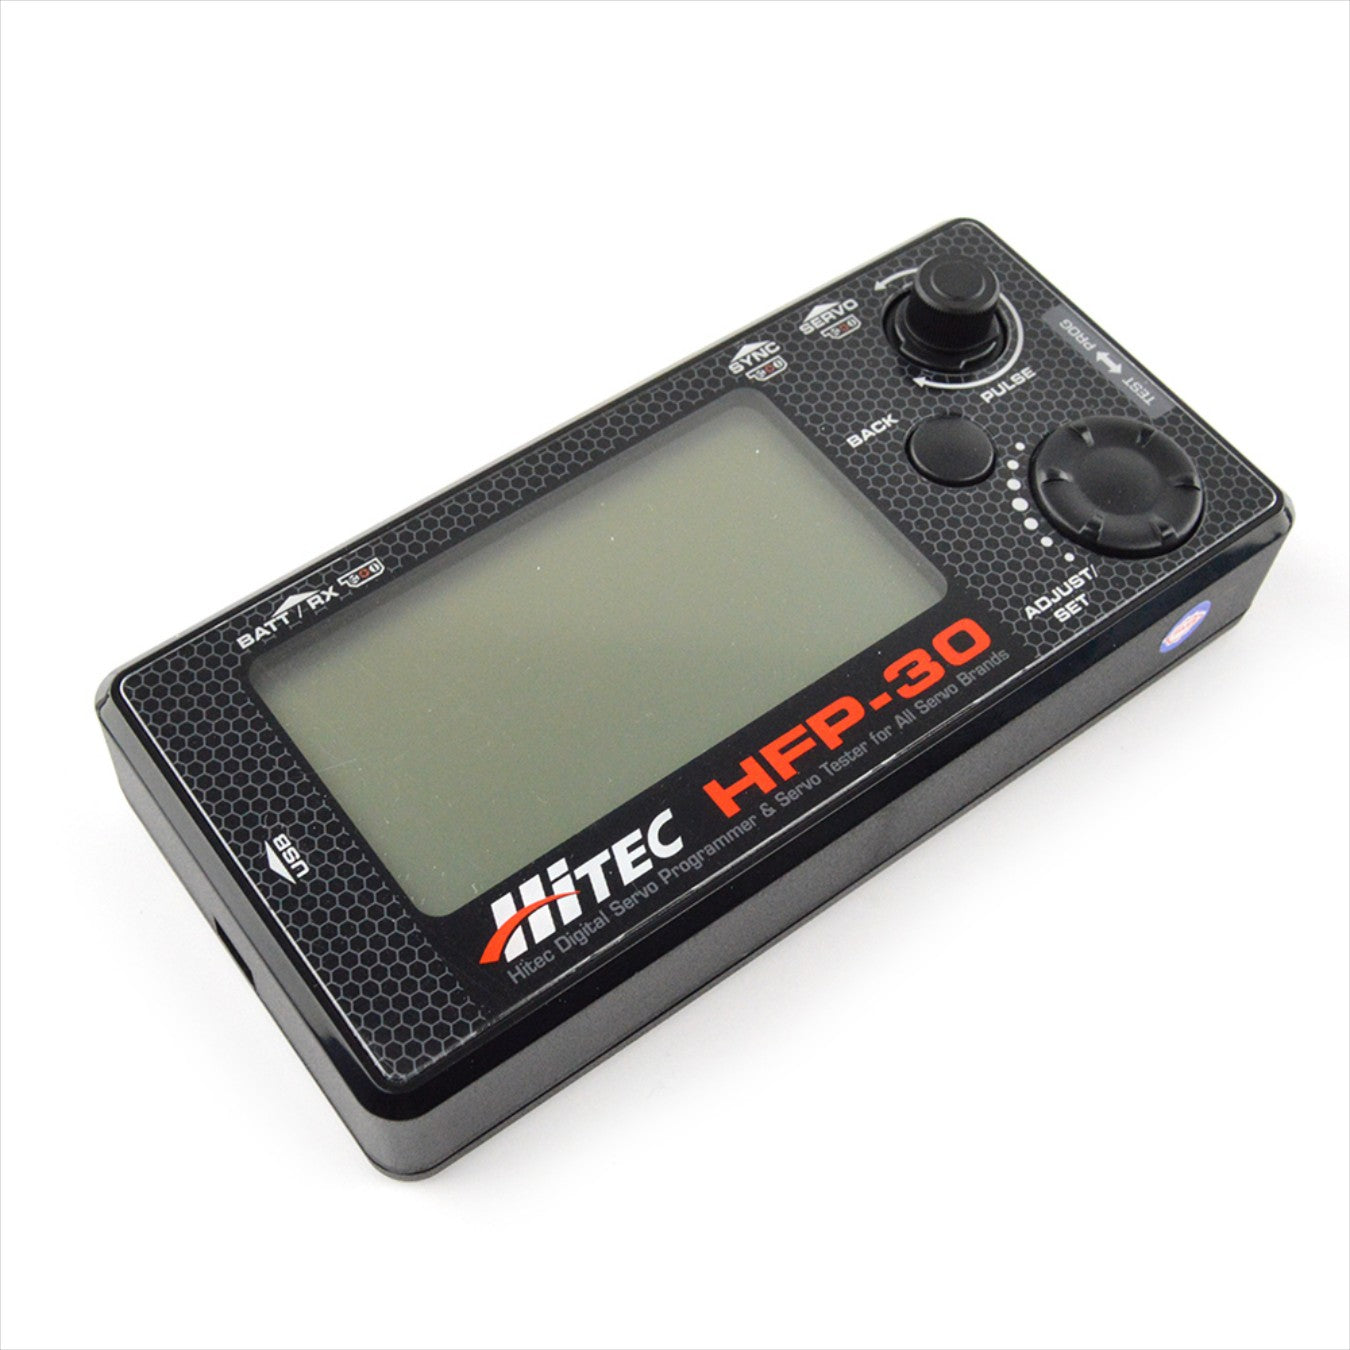 Hitec HFP-30 Digital Servo Programmer & Universal Servo Tester